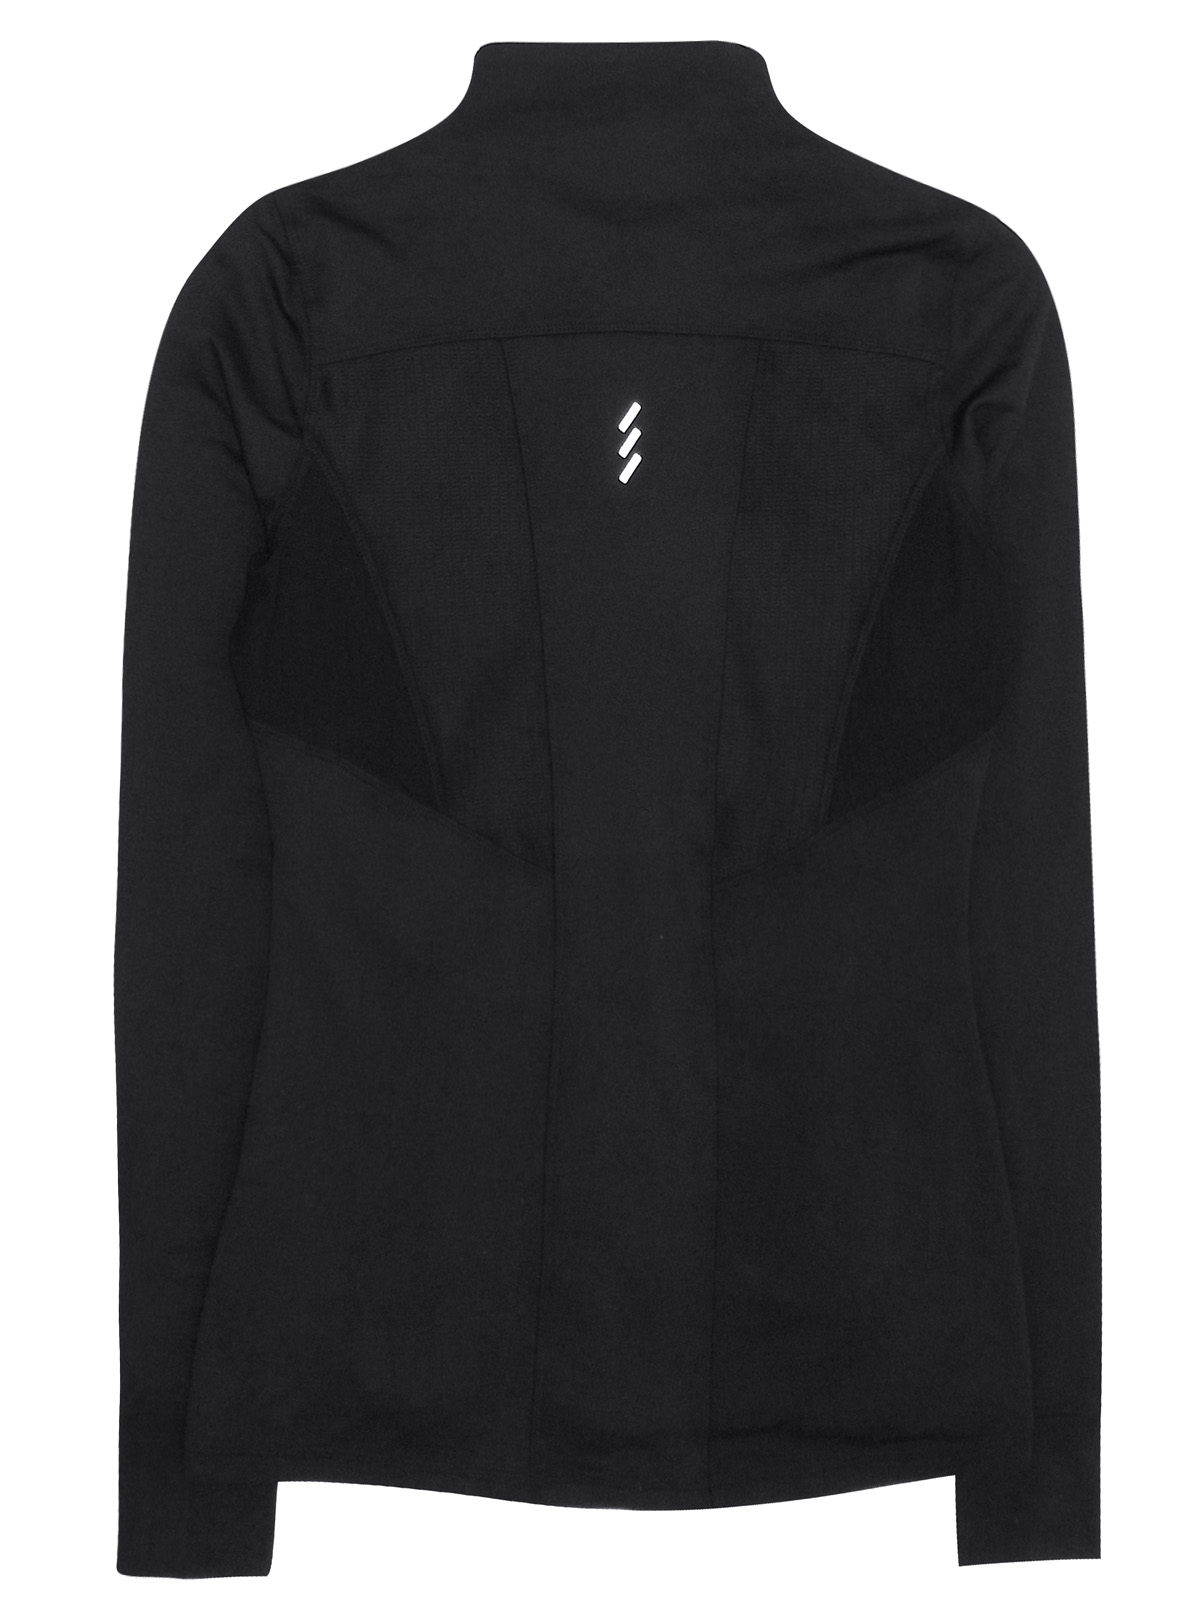 N3XT BLACK Zip Through Panelled Sports Jacket - Size 6 to 8